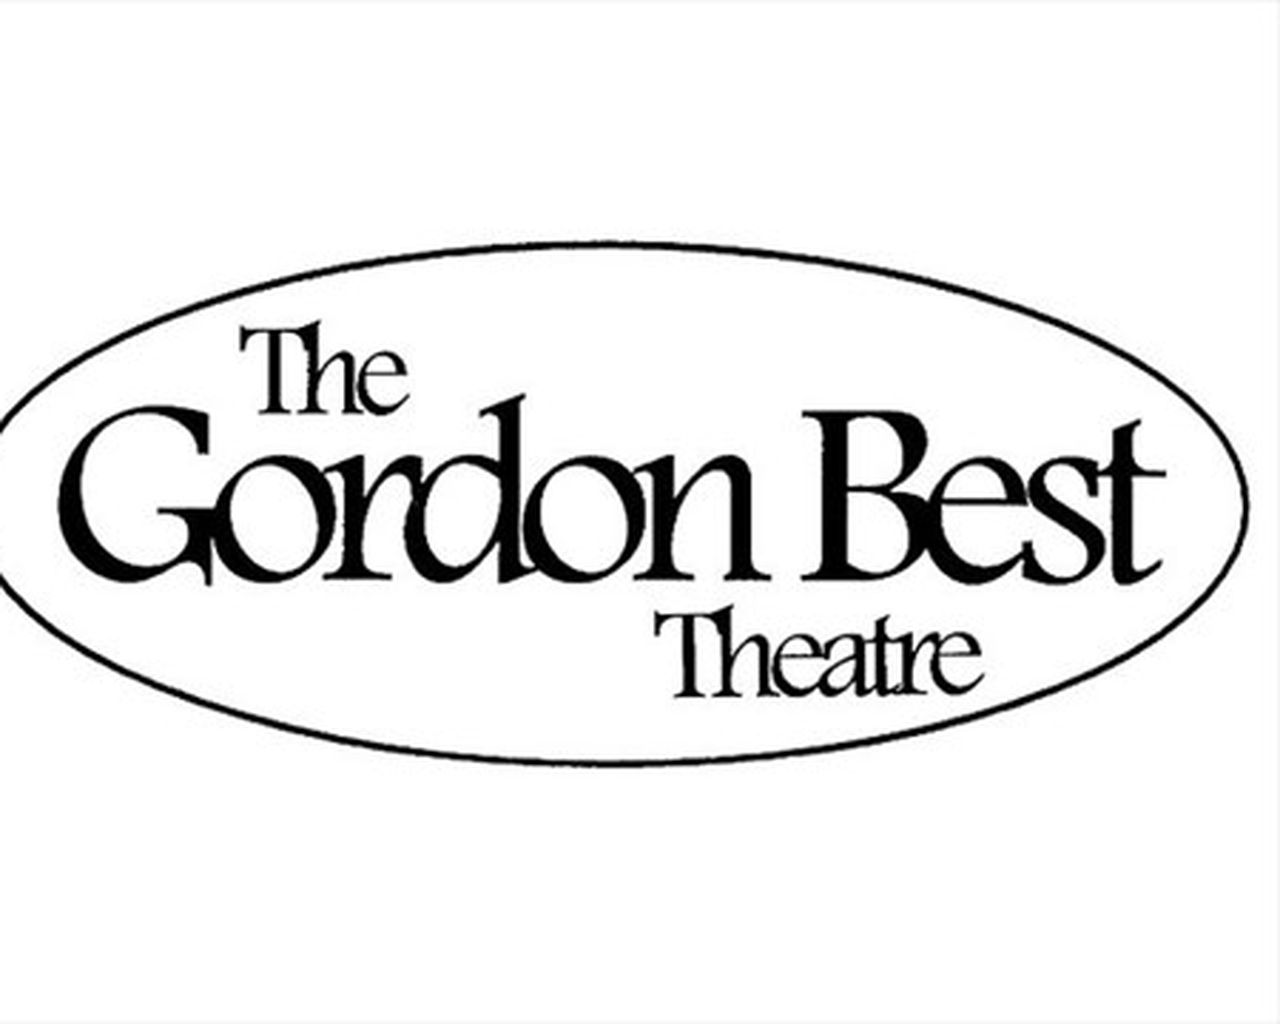 logo sating "the Gordon Best Theatre"